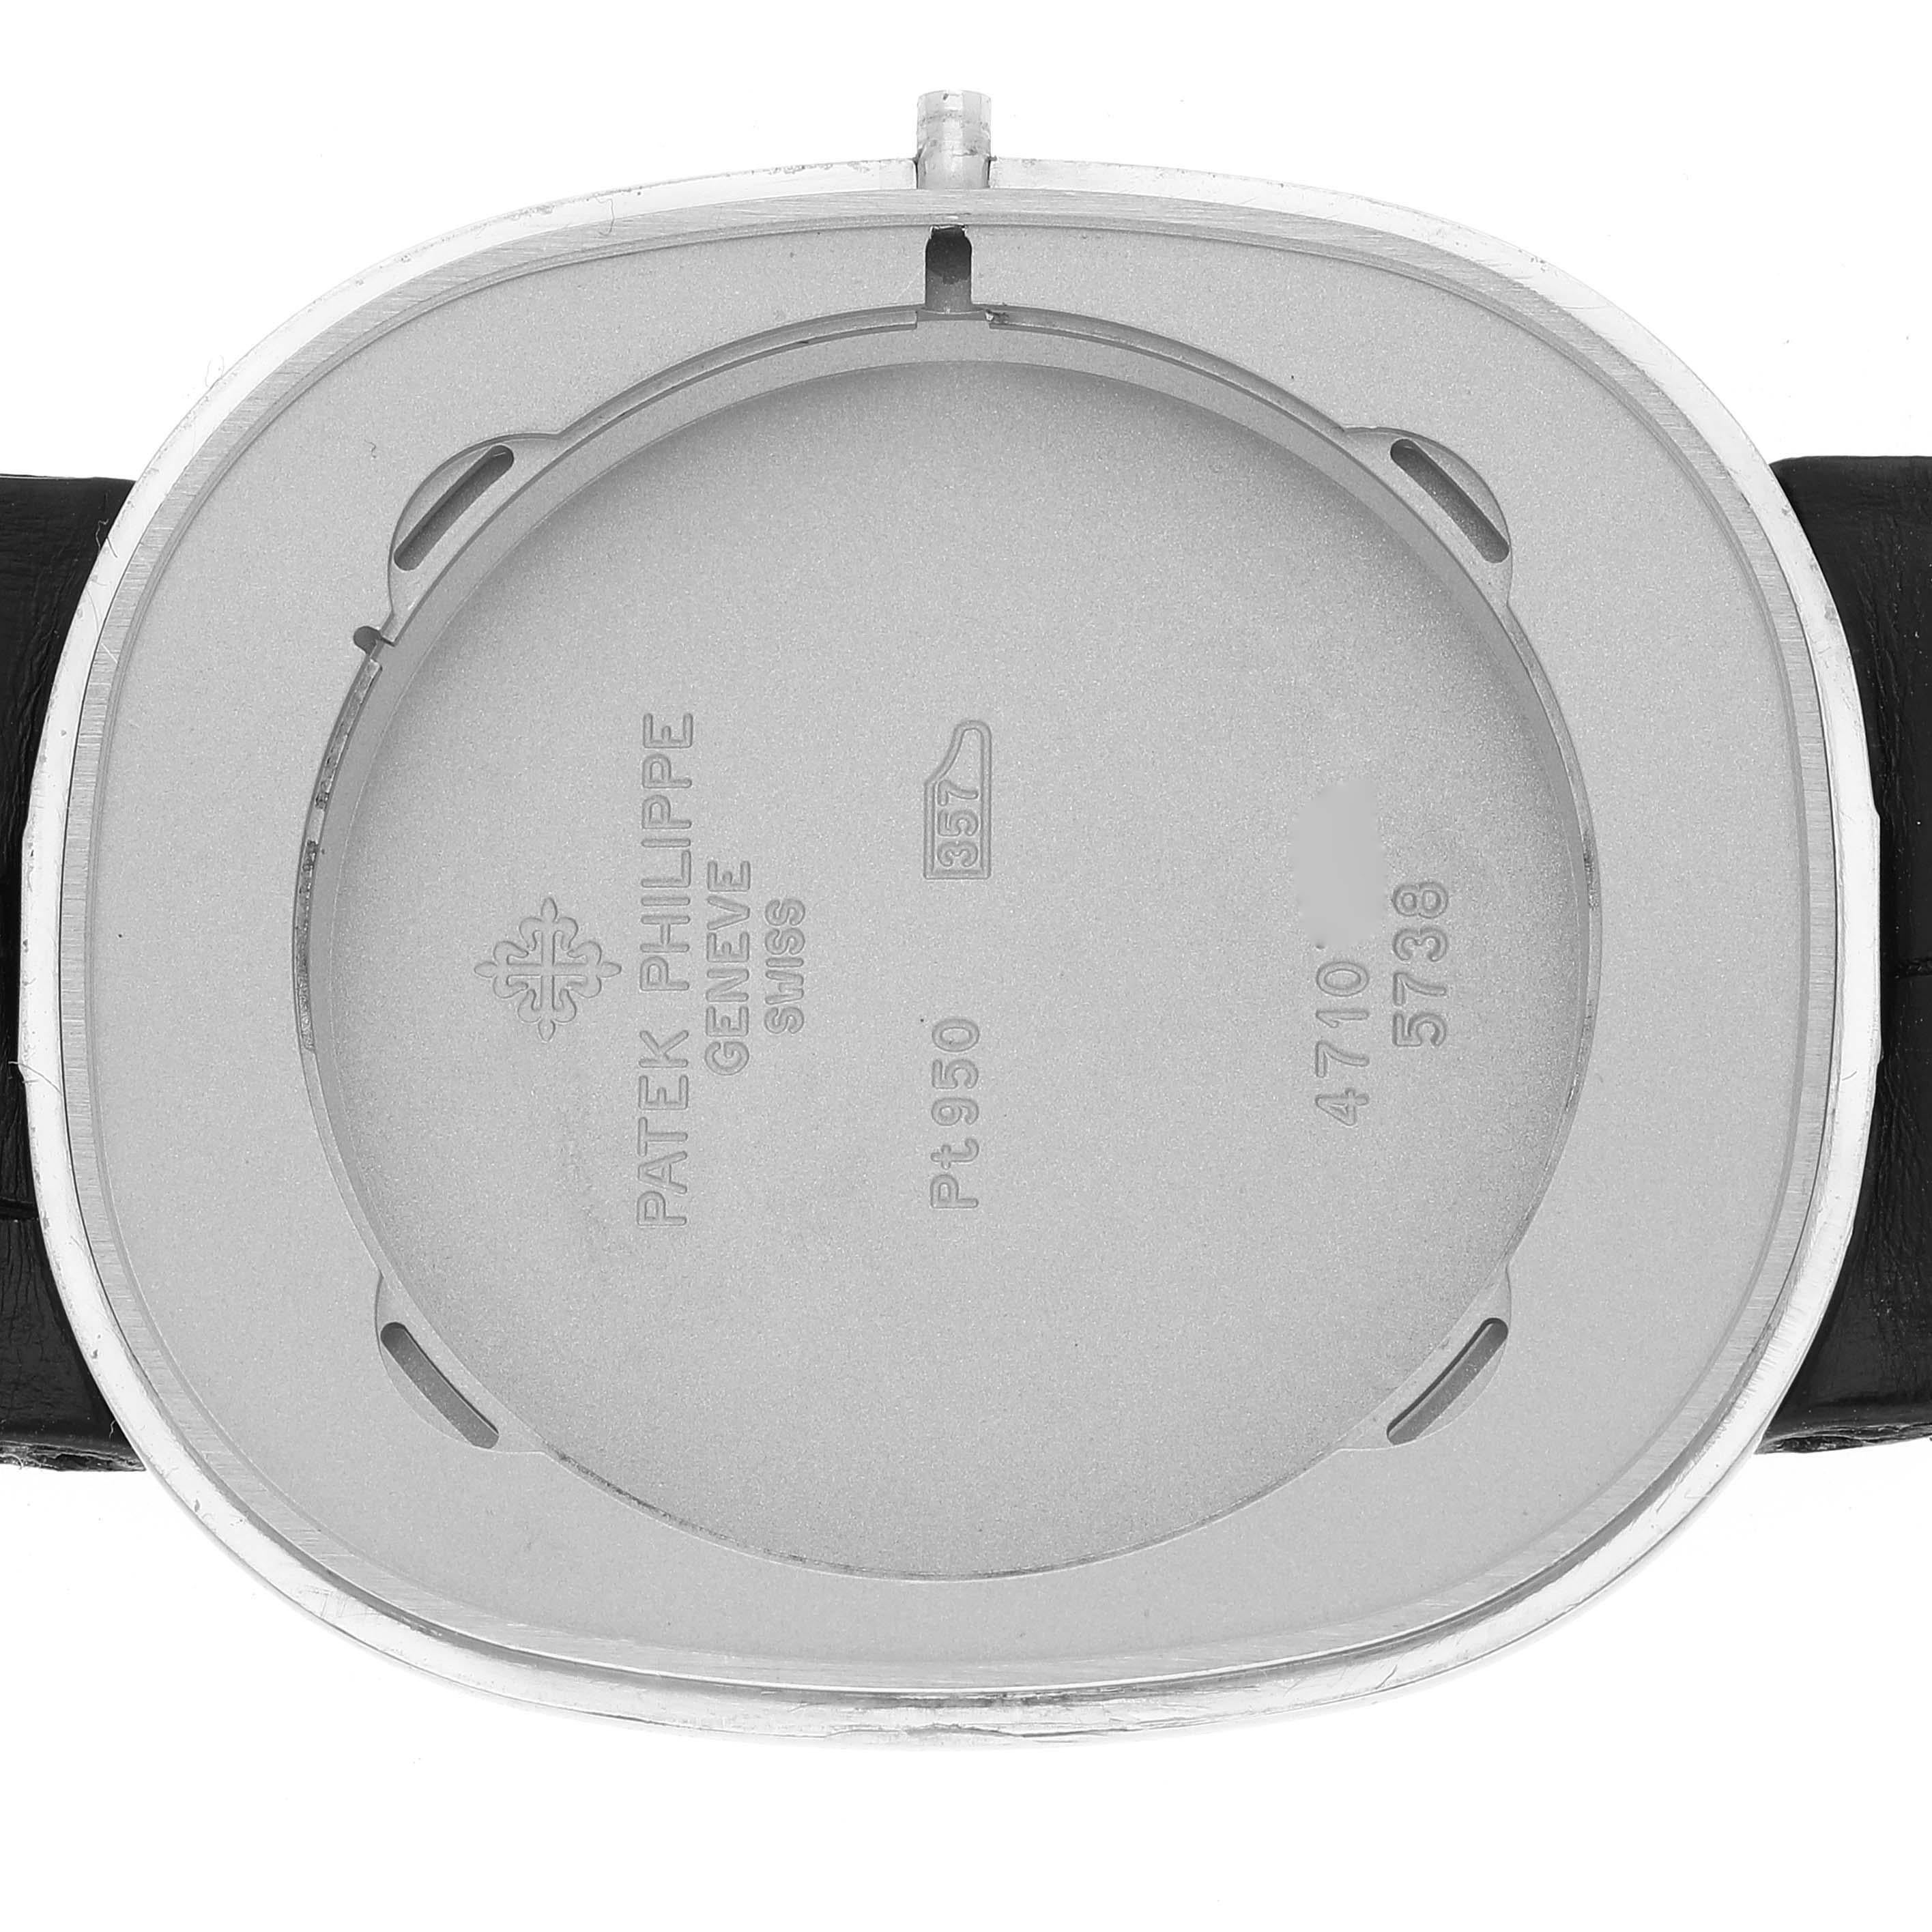 Patek Philippe Golden Ellipse Grande Taille Platinum Blue Dial Watch 5738 For Sale 1